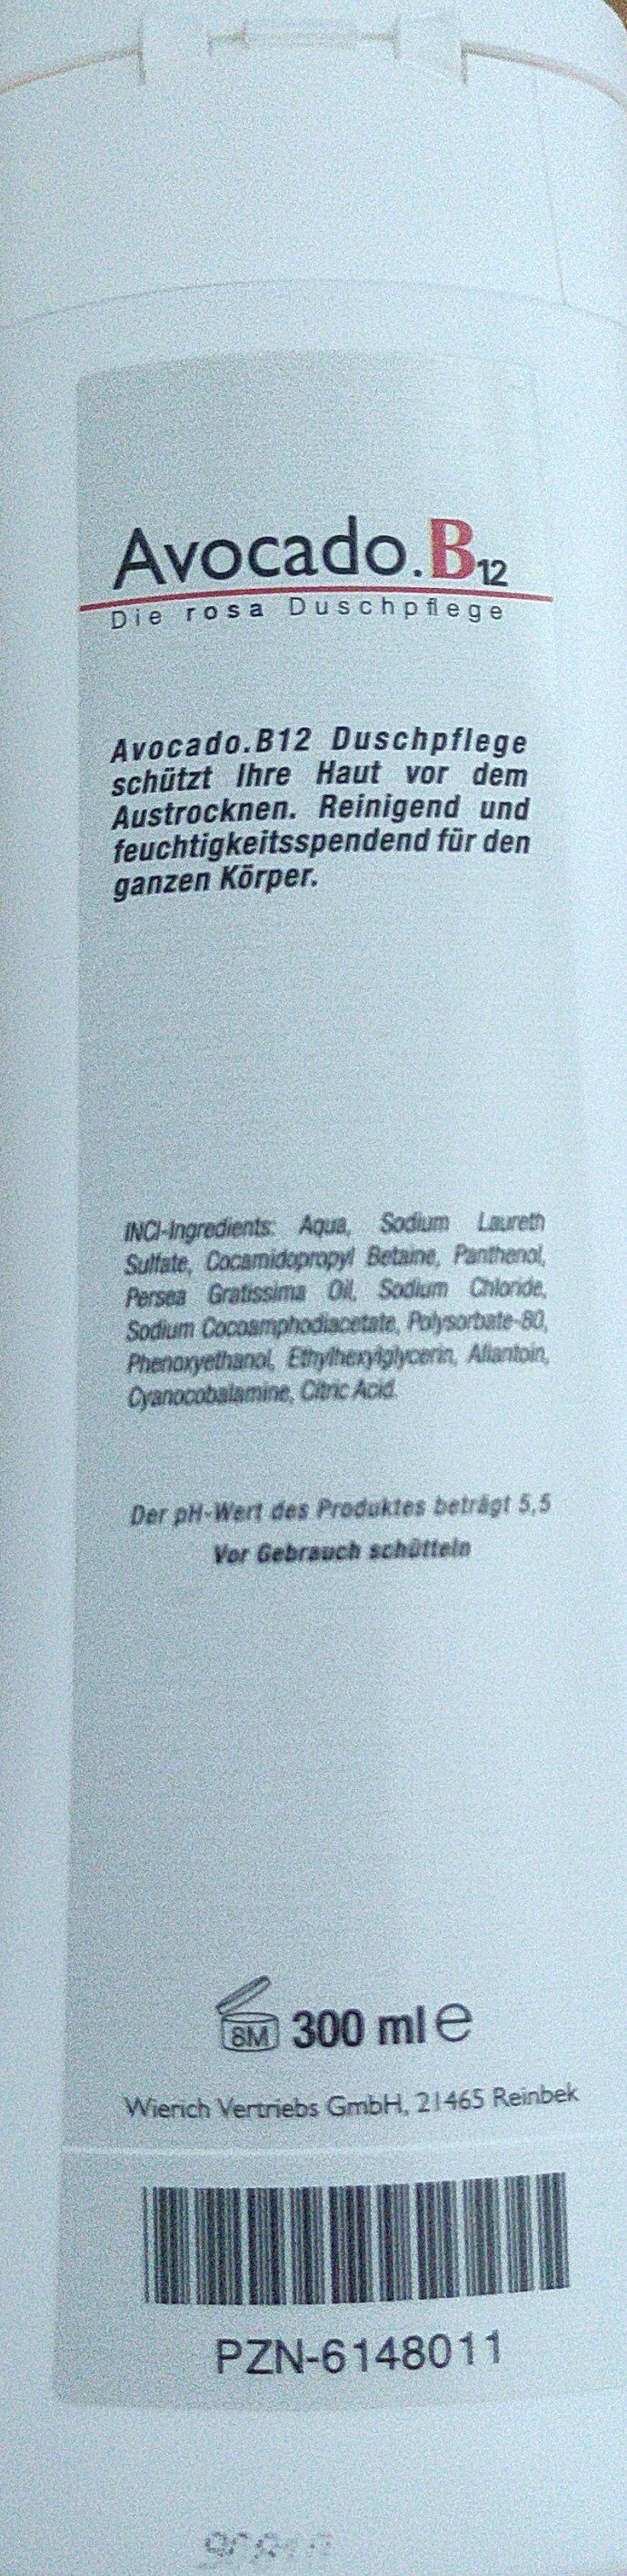 Avocado B12 Duschpflege - Produit - de